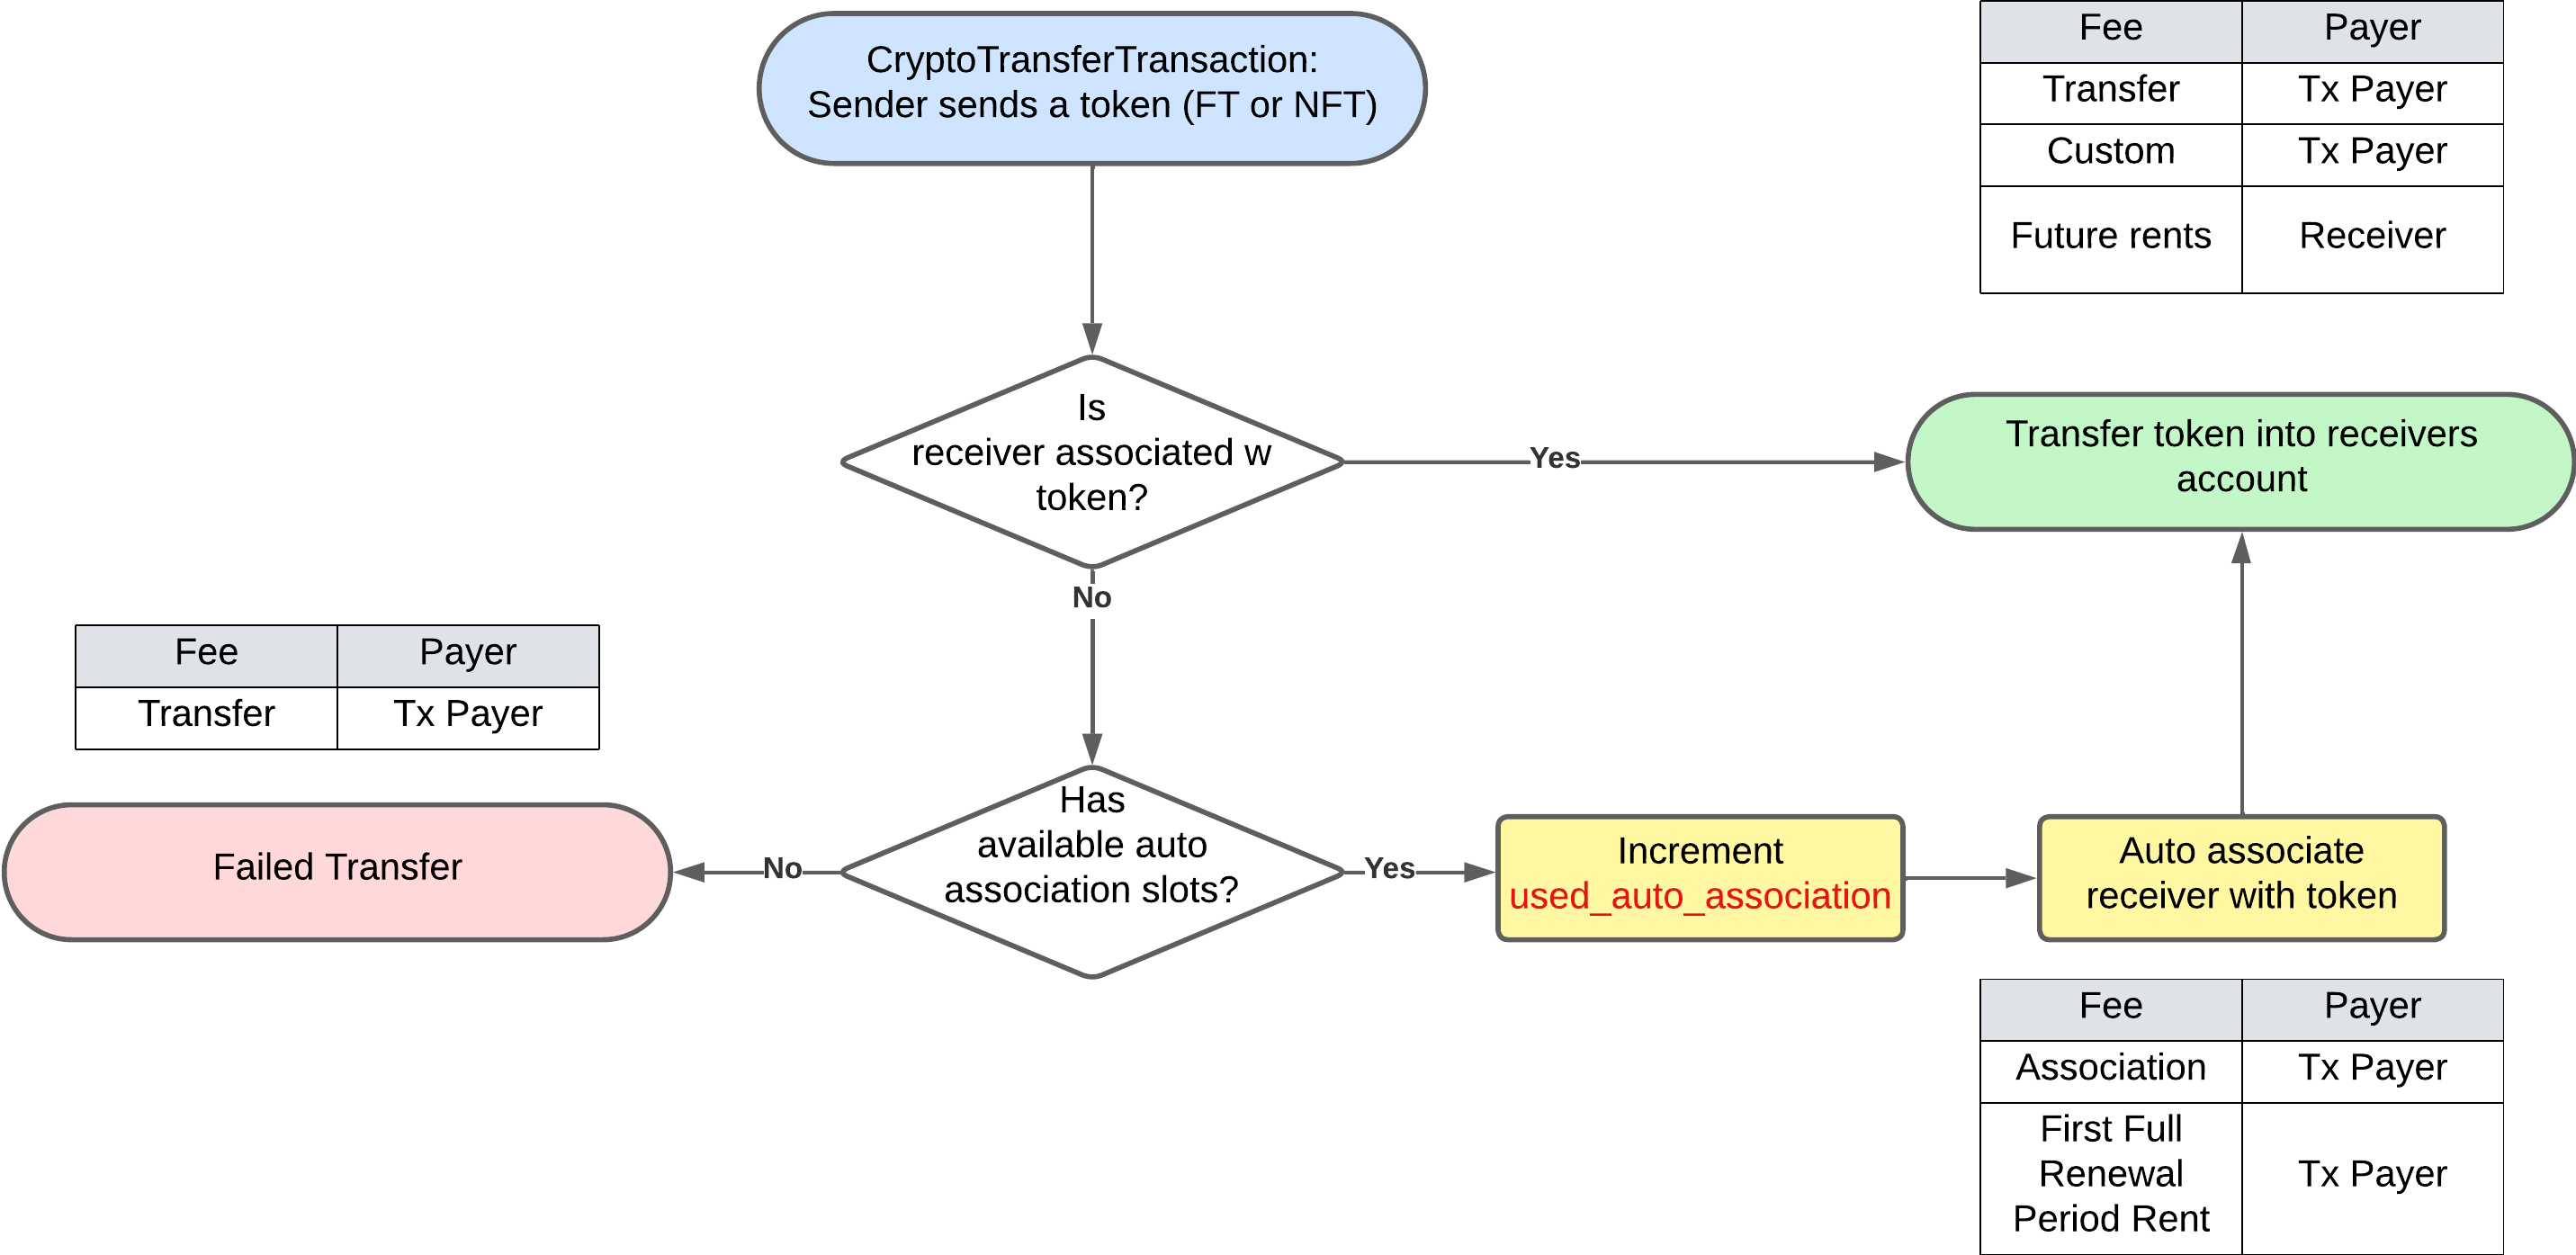 Crypto Transfer Transaction